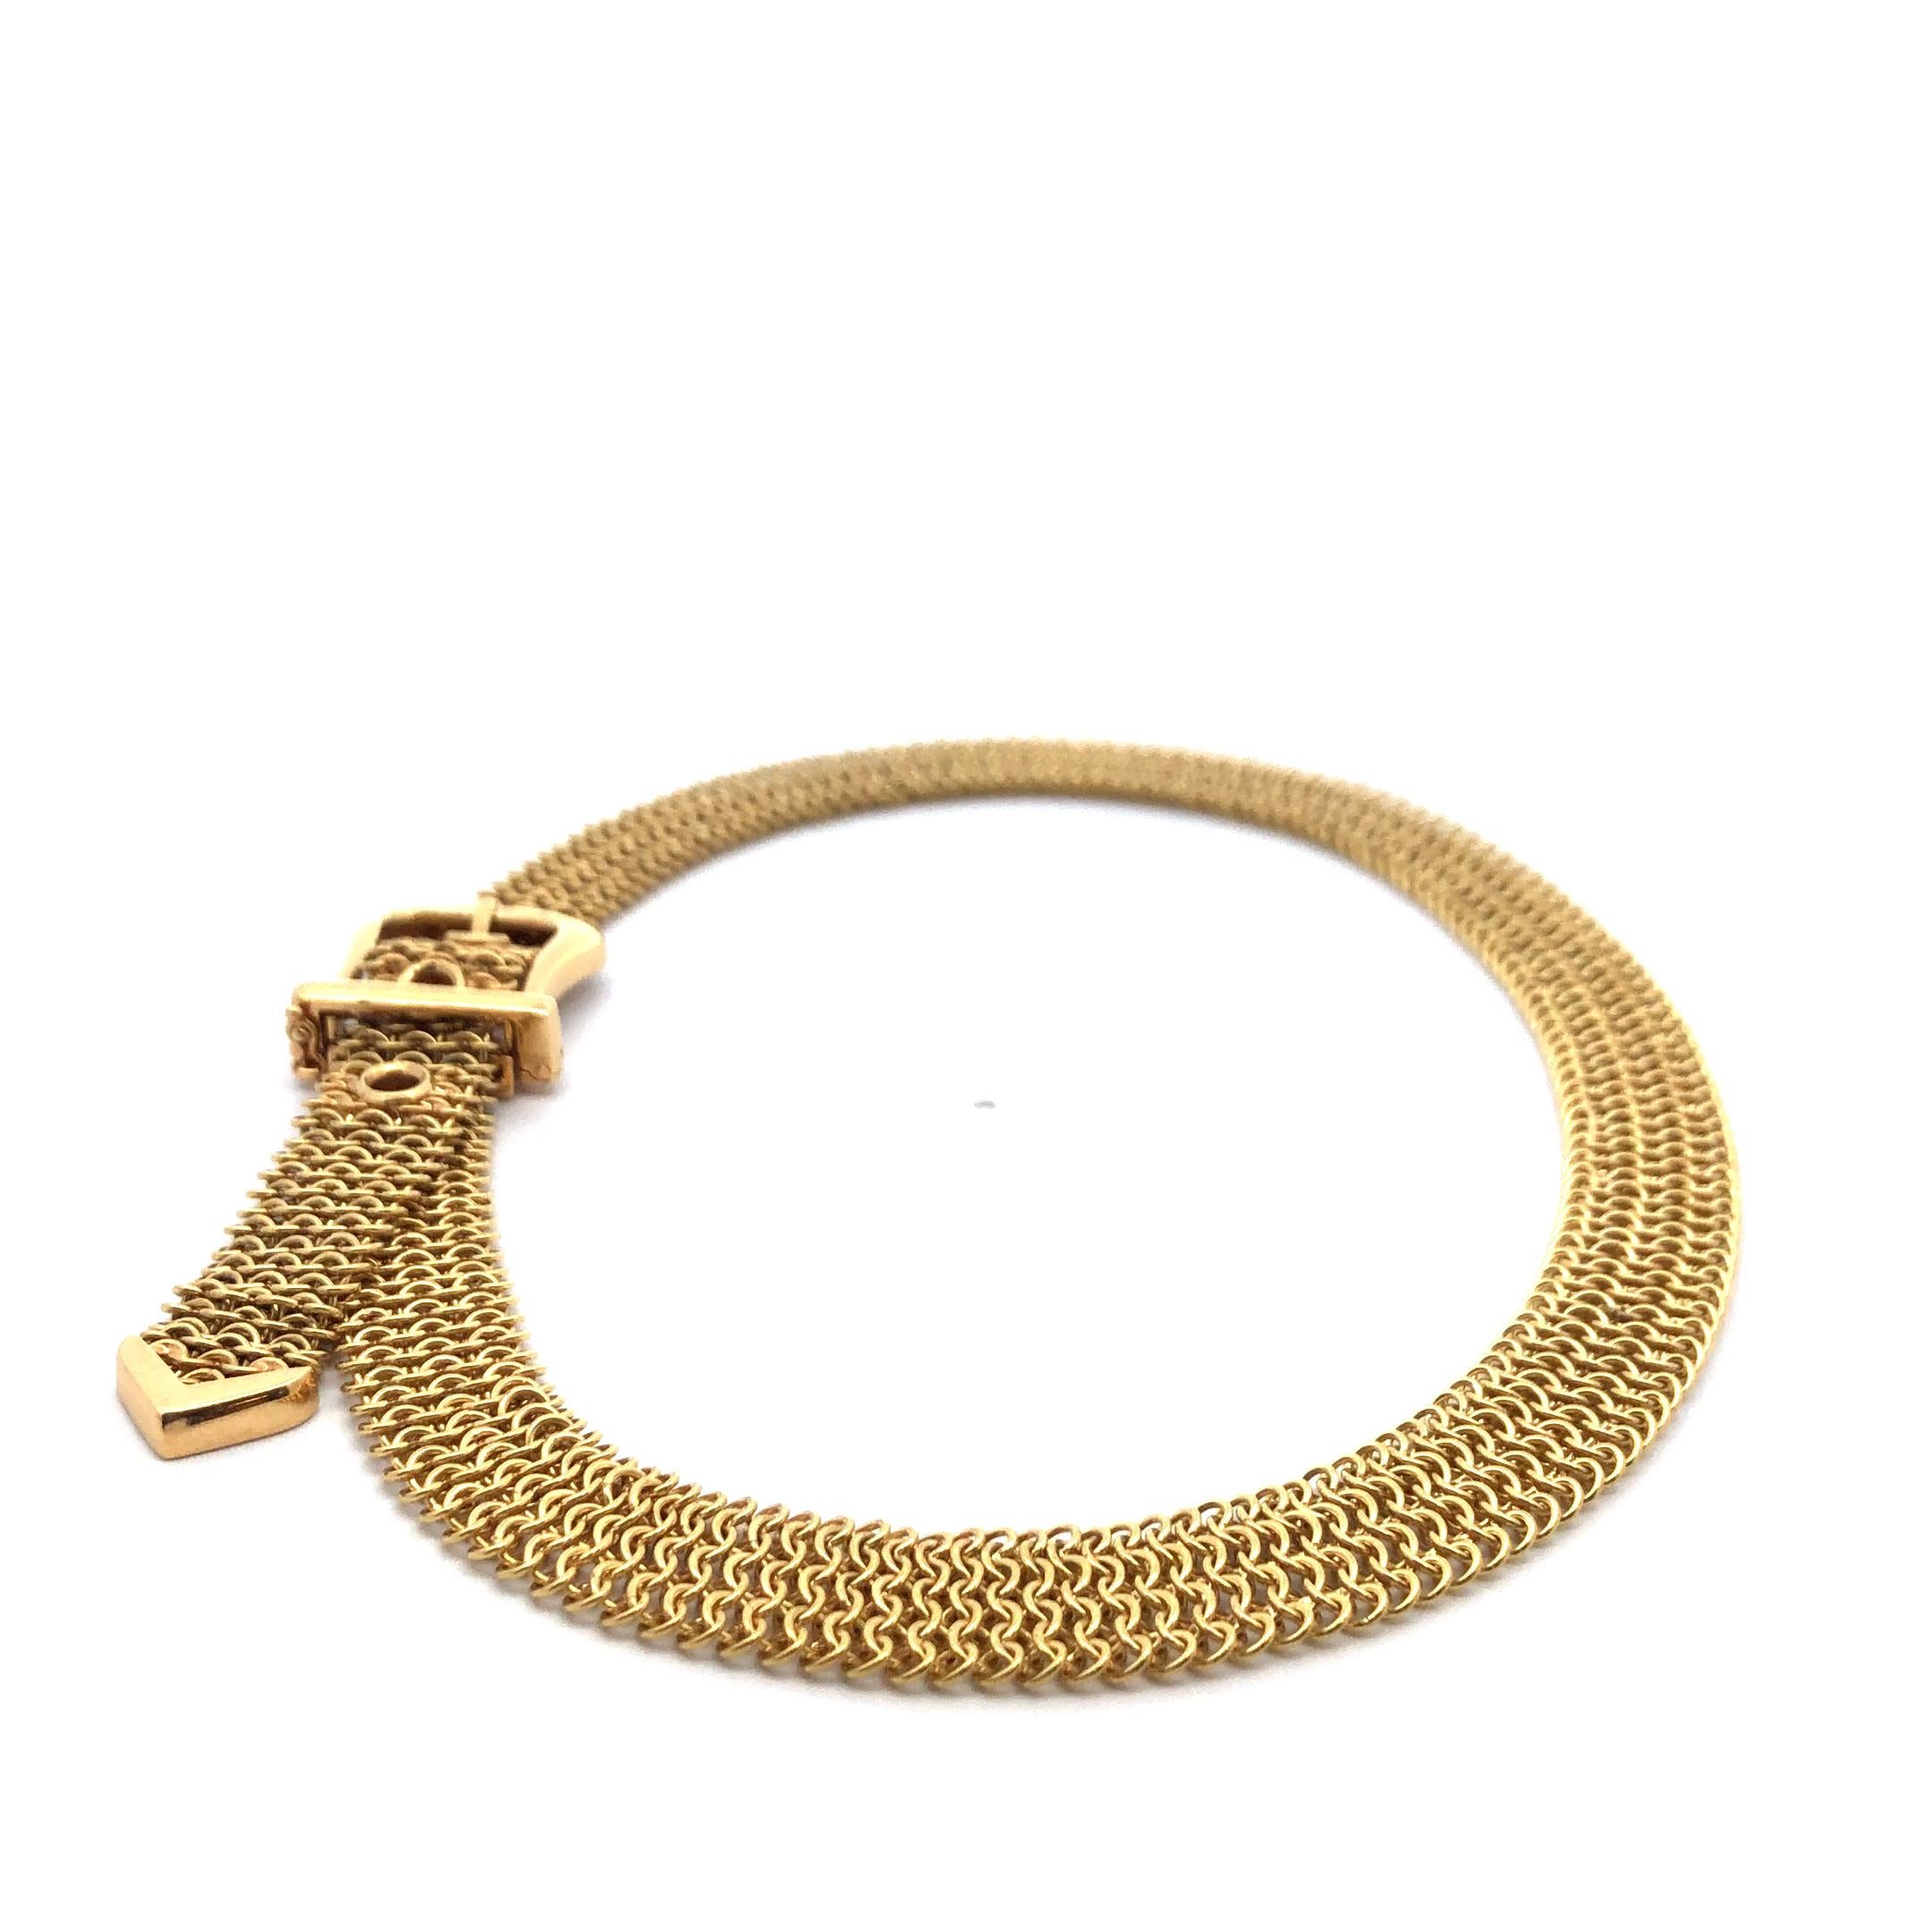 Tiffany & Co. Mesh Choker 18K Yellow Gold. The Choker weigh 52Grams and measures 16'' long